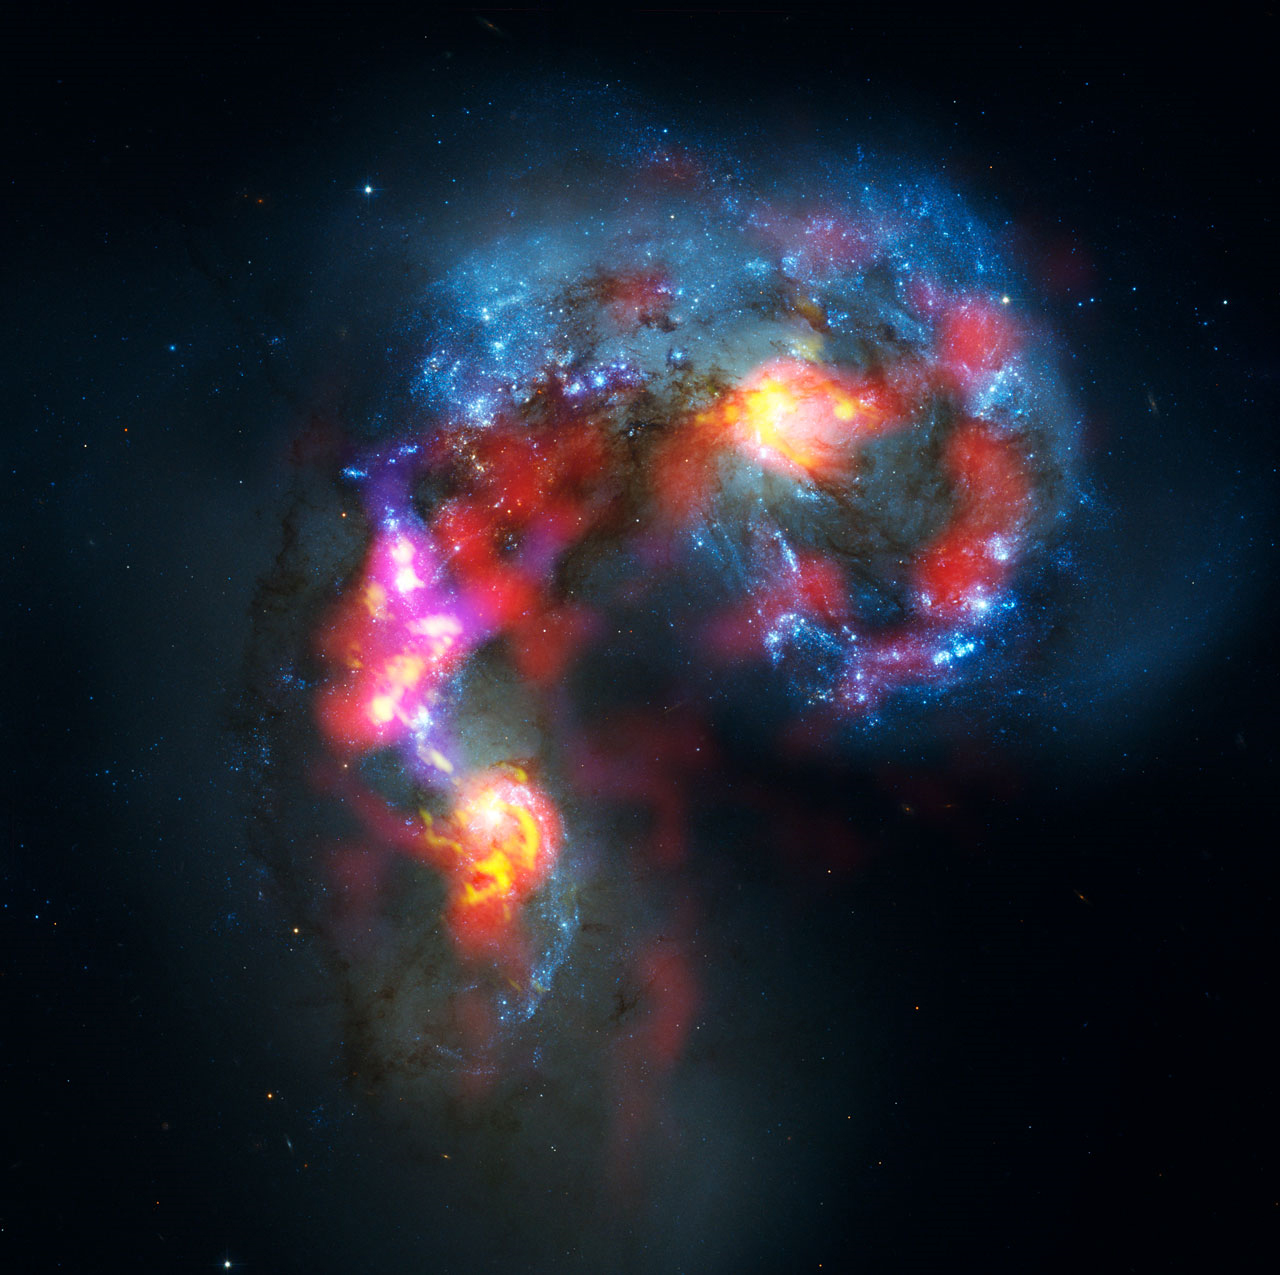 ALMA image of the Antennae nebula